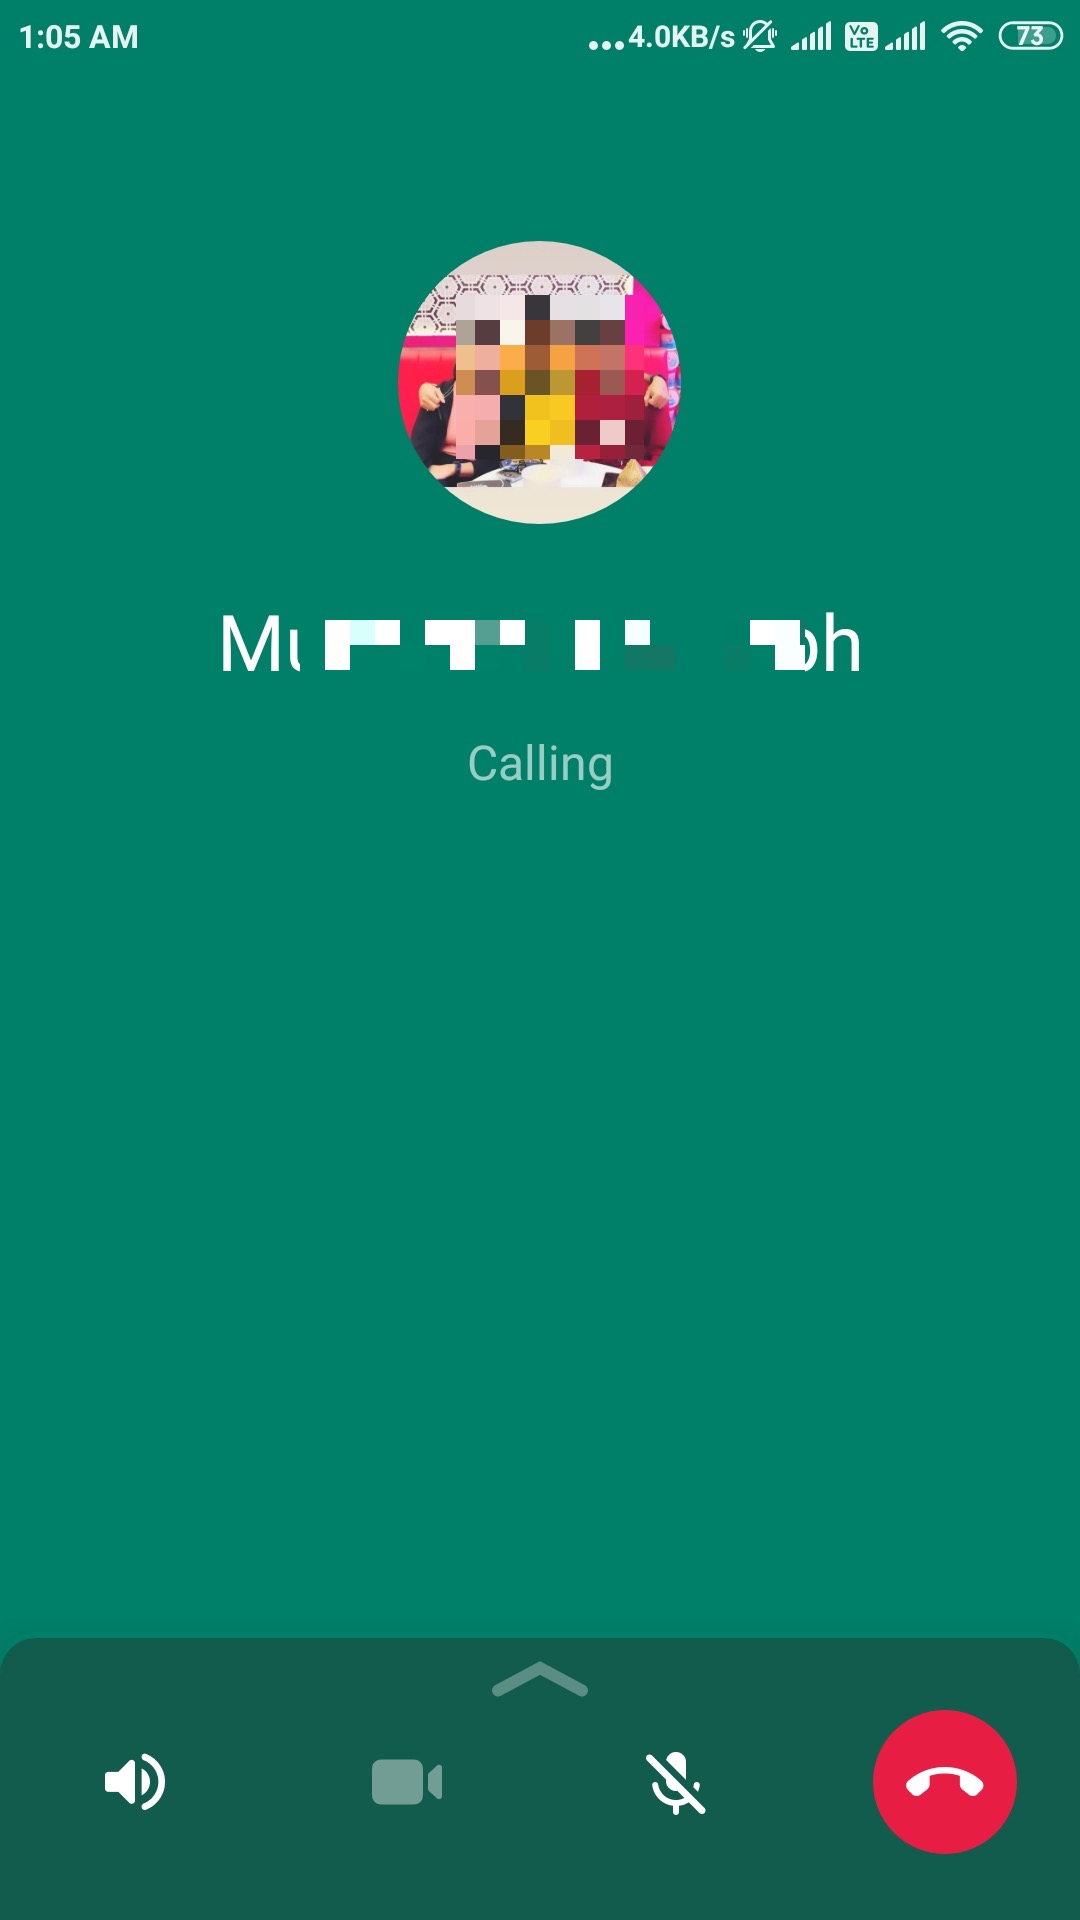 WhatsApp-Call-Calling-notification